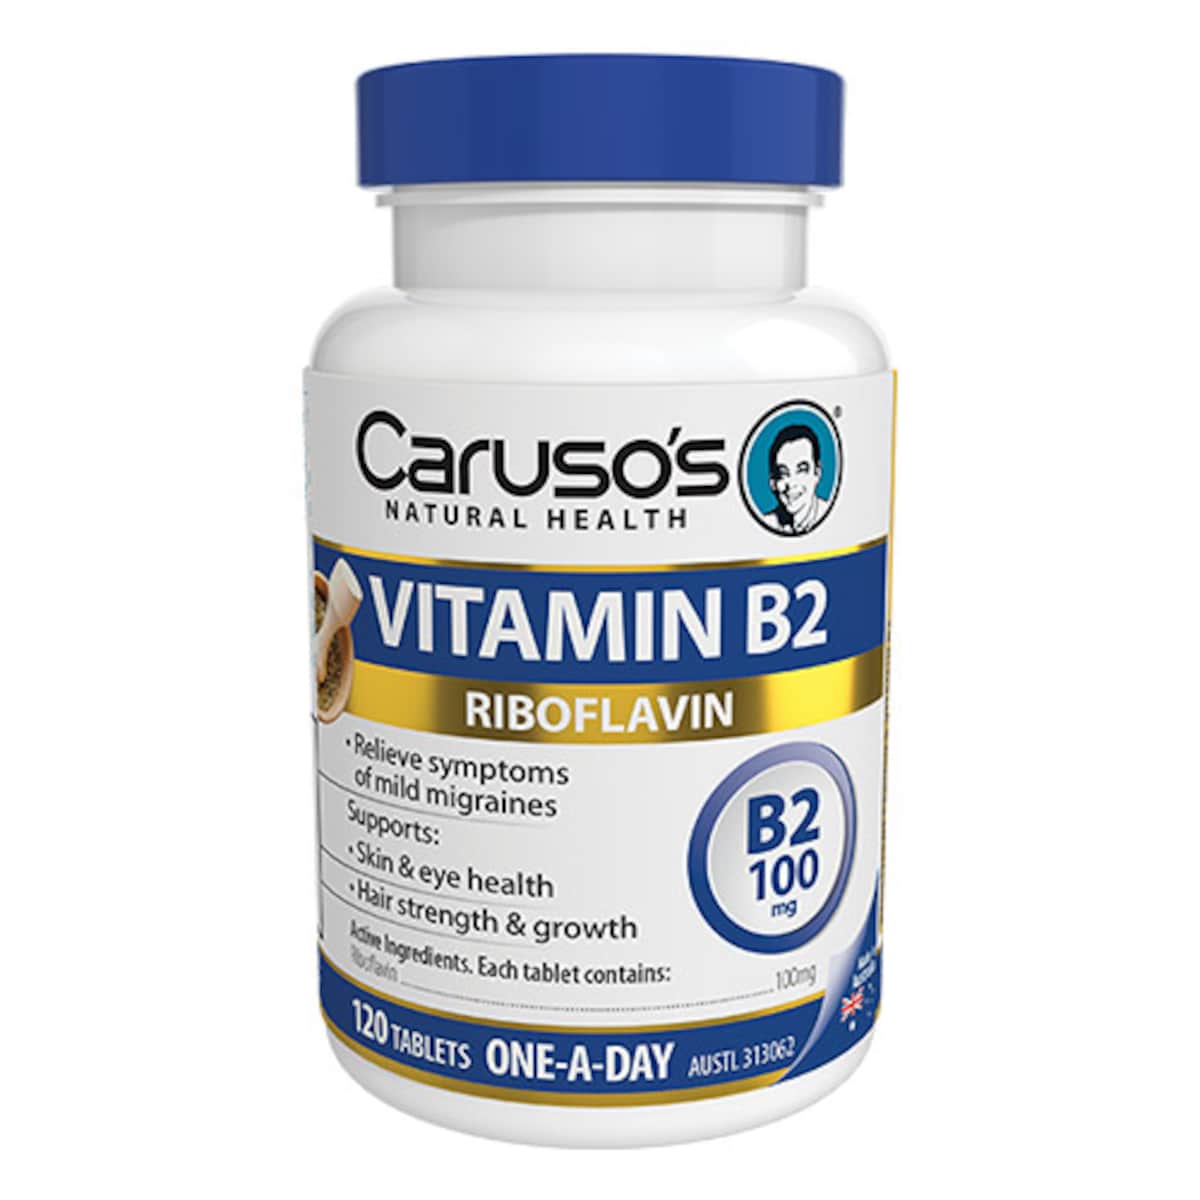 Carusos Vitamin B2 Riboflavin 120 Tablets